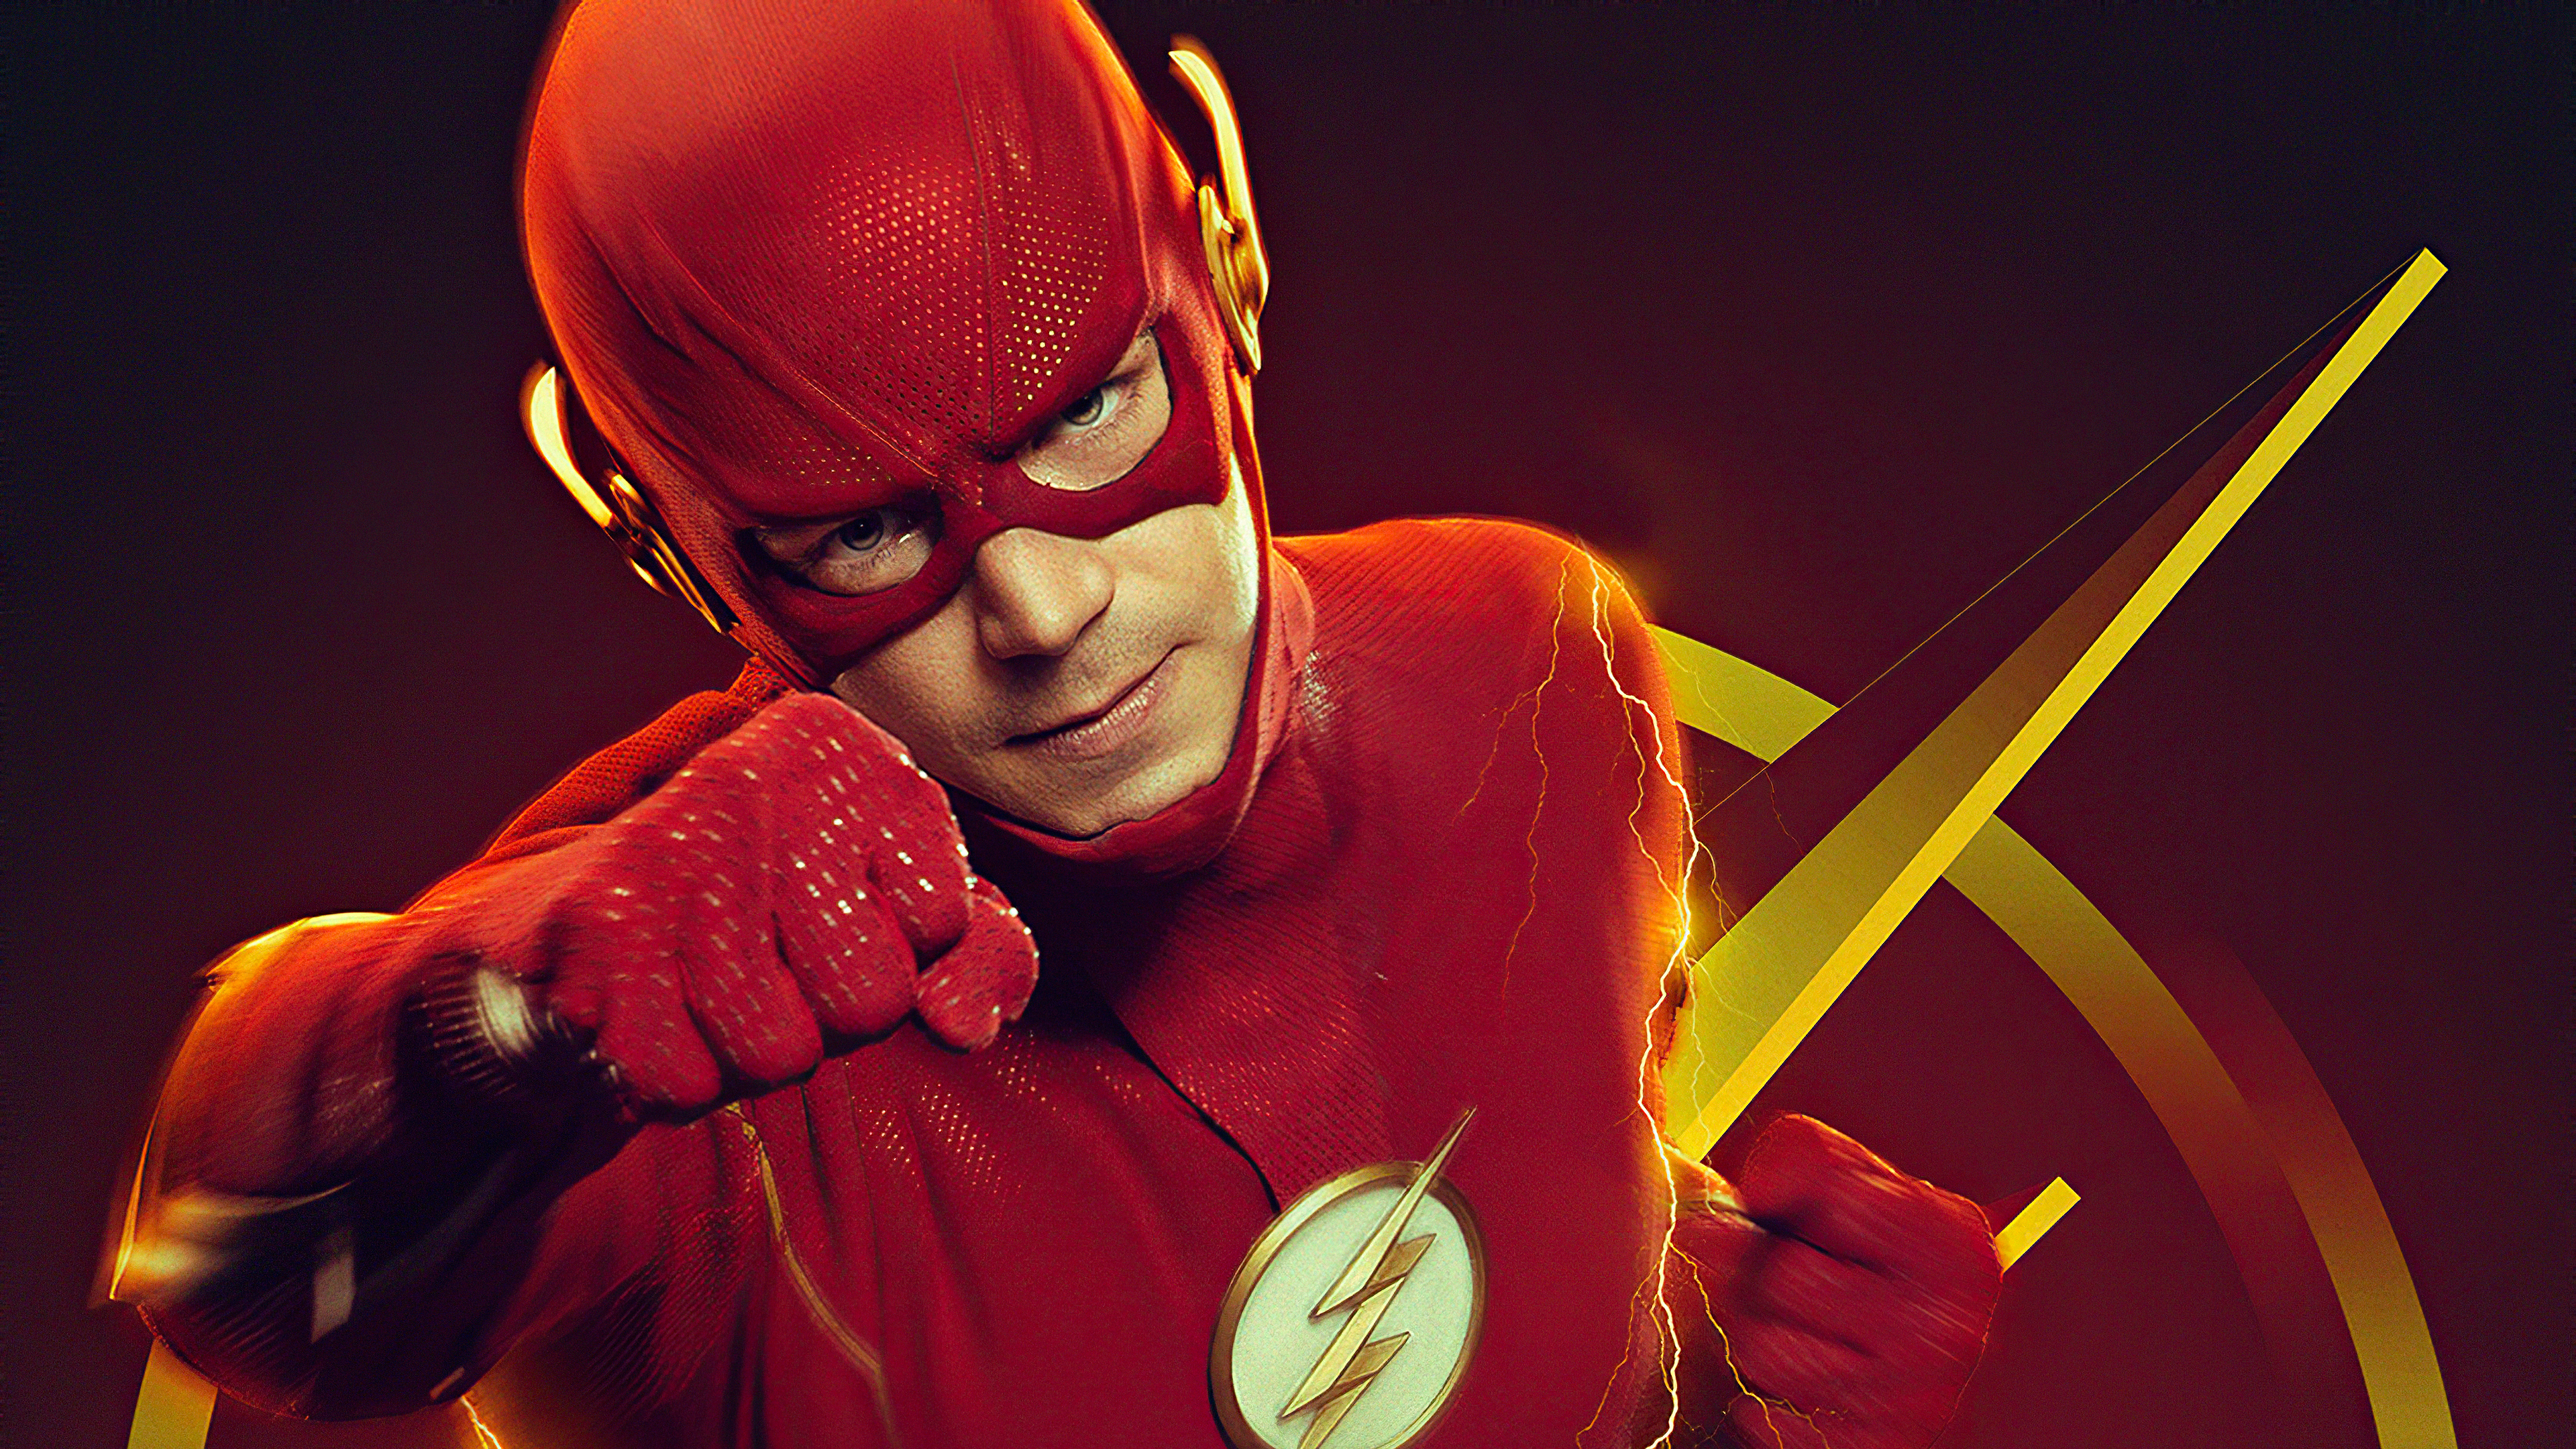 Flash Poster 2019 - Flash Season 6 New Suit - HD Wallpaper 